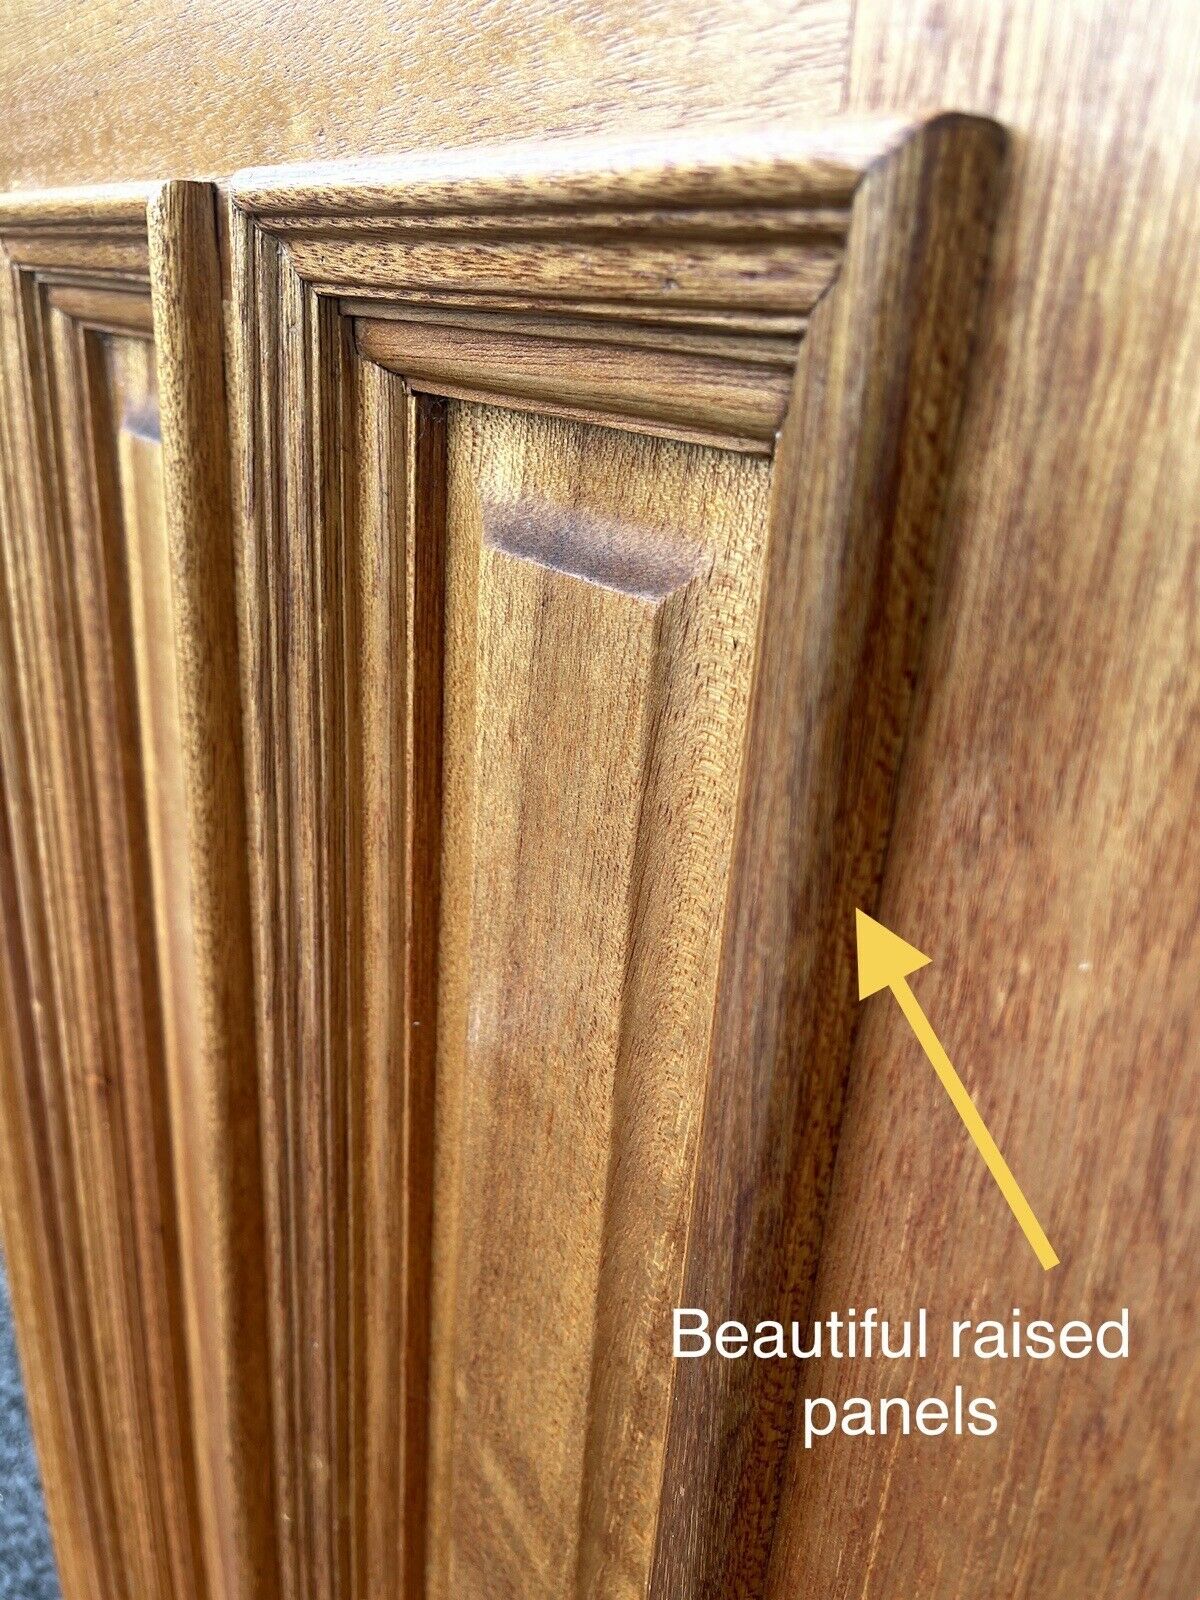 Reclaimed Old Edwardian Victorian Panel Front Wooden Timber Door 1977 x 840mm